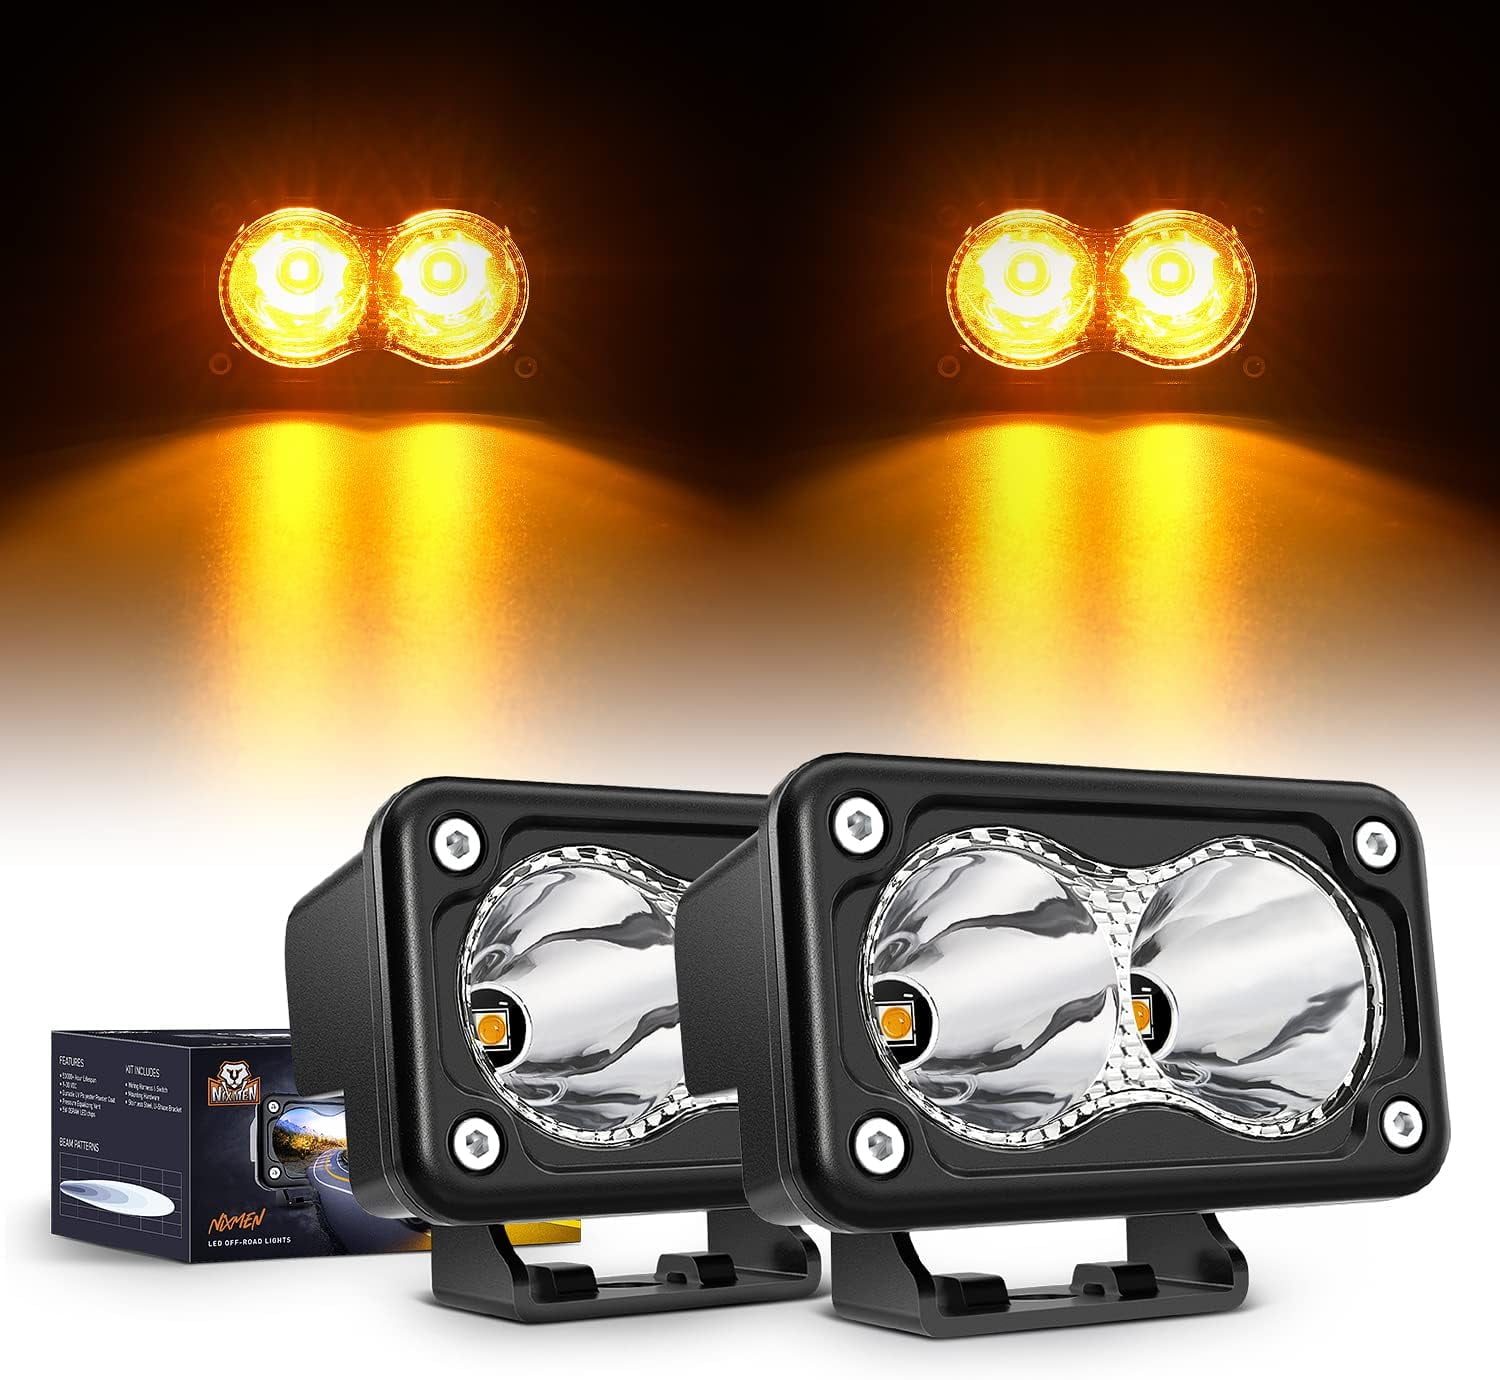 Yada 4 LED SPOT LIGHTS (2-PACK) - Yada Auto Electronics